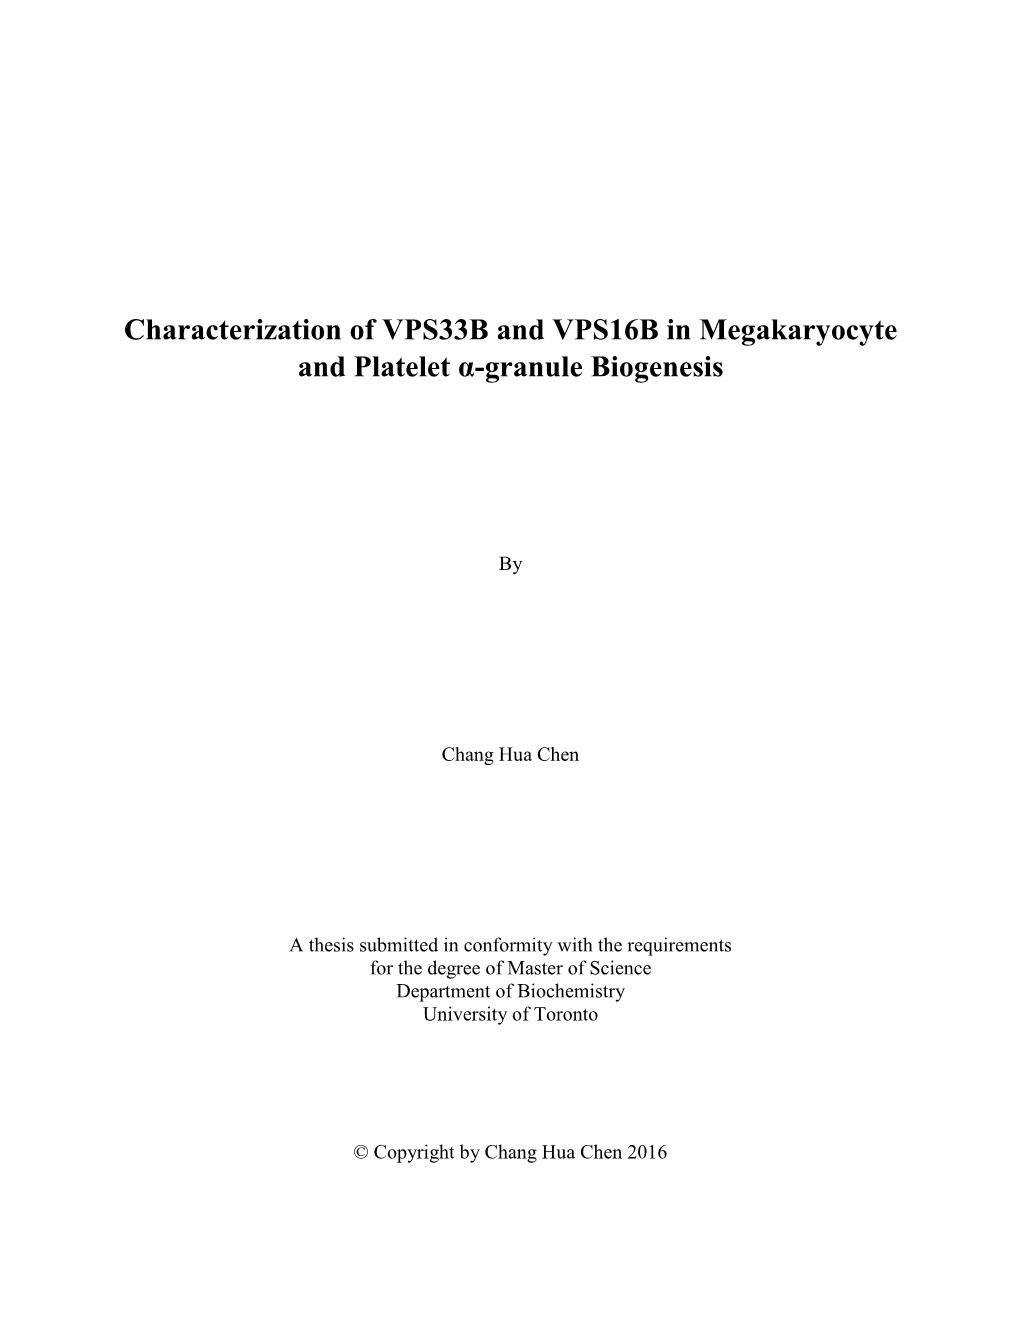 Characterization of VPS33B and VPS16B in Megakaryocyte and Platelet Α-Granule Biogenesis